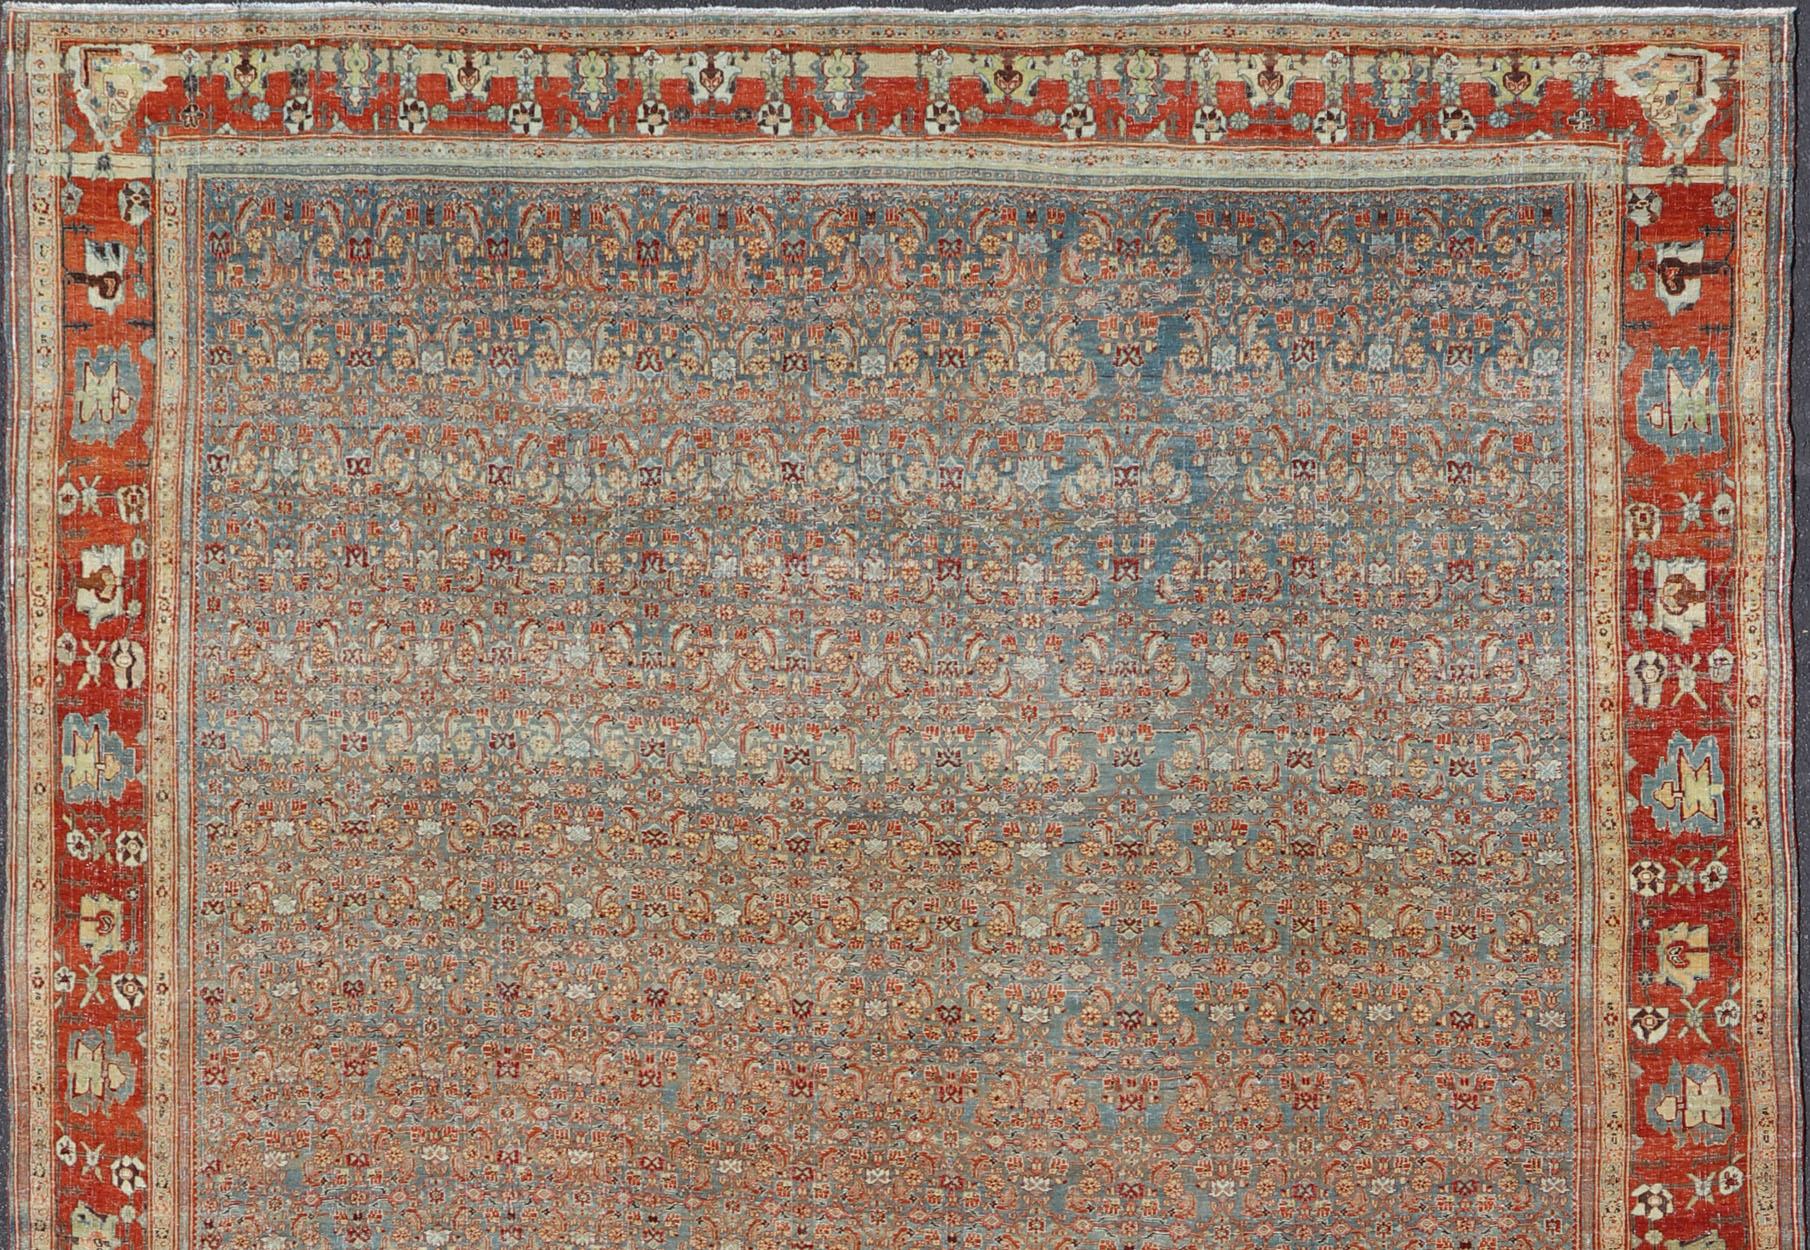 Grand tapis ancien persan Bidjar en all over Herati Design par Keivan Woven Arts. Ce tapis persan Bidjar ancien de grande taille présente une variété de couleurs, tapis R20-0903-178549, pays d'origine / type : Iran / Bidjar, circa 1890

Dimensions :